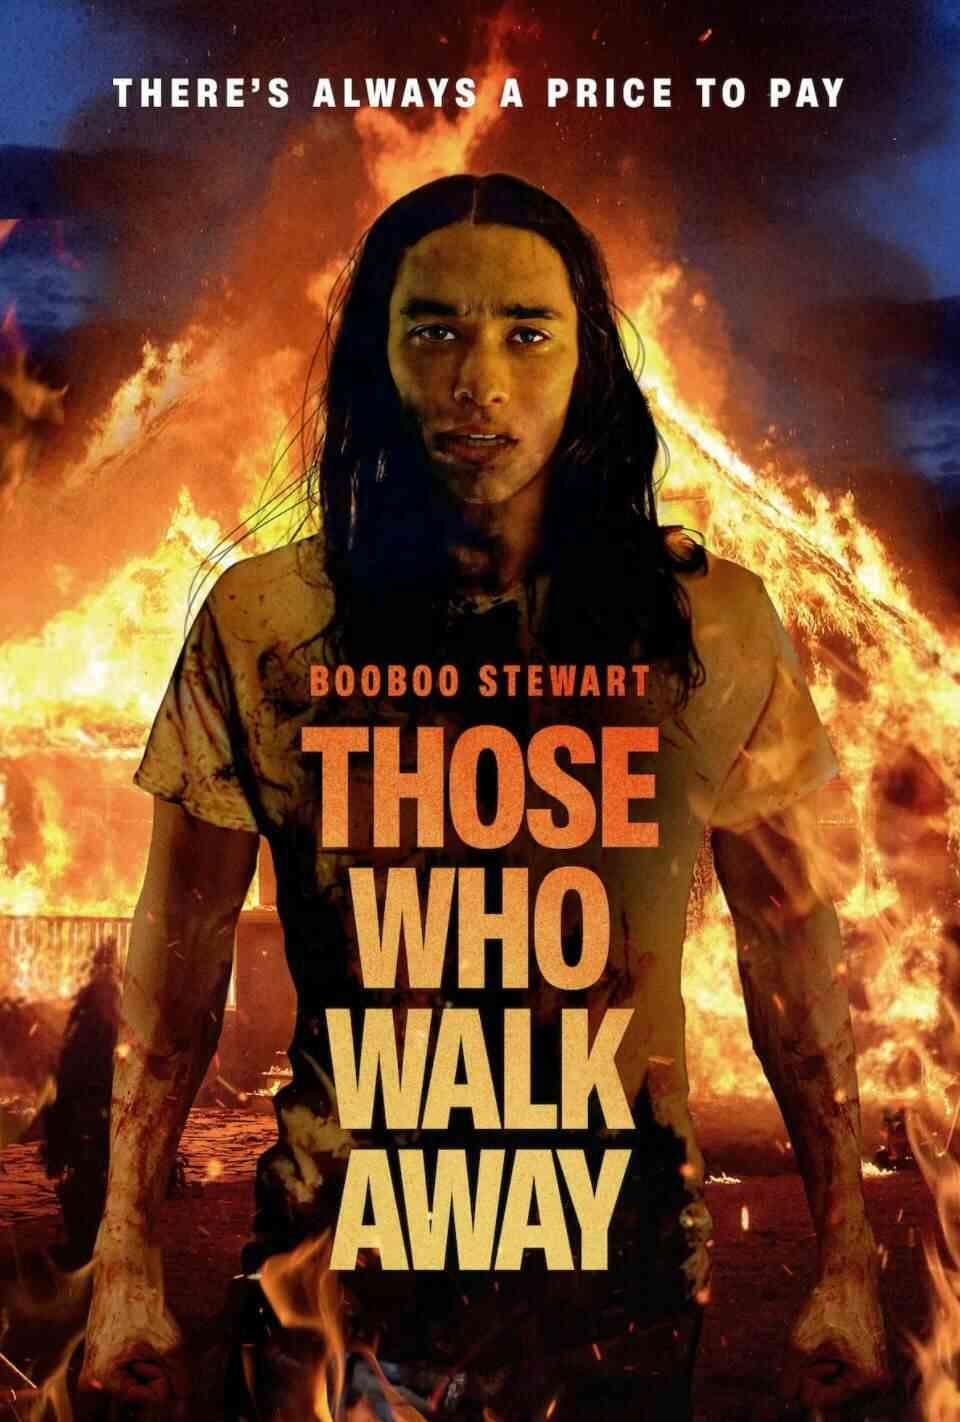 Read Those Who Walk Away screenplay (poster)